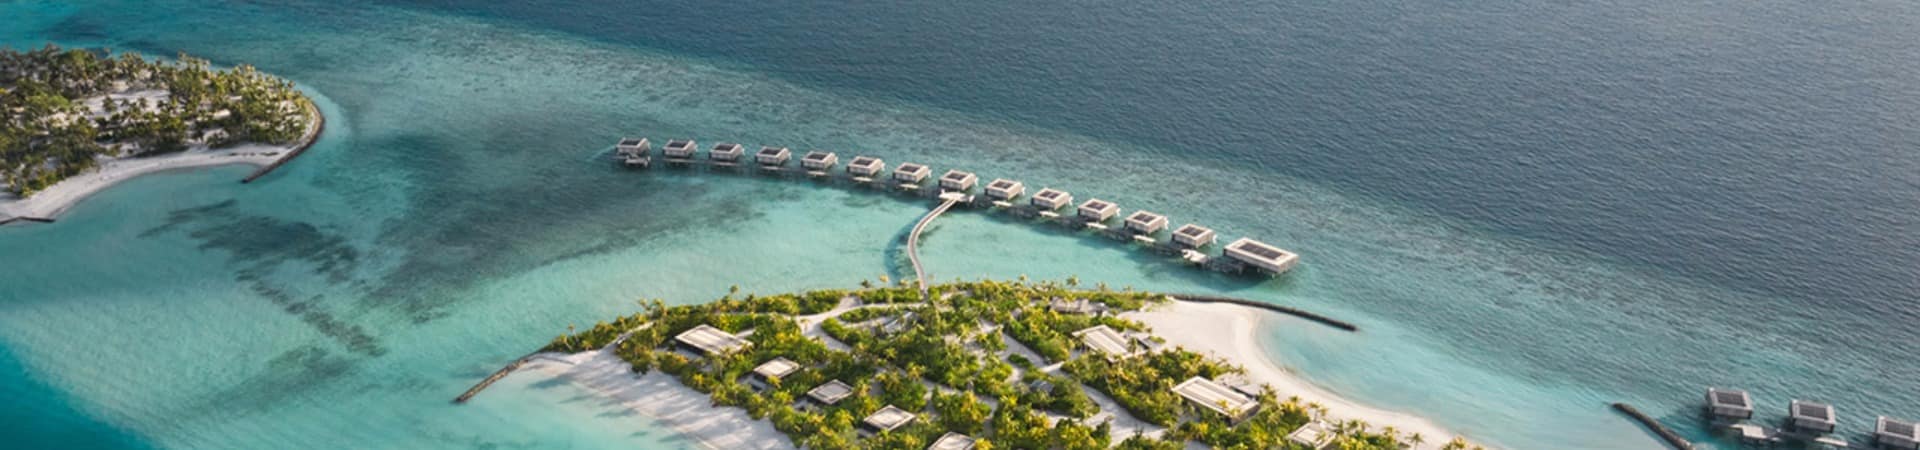 Patina maldives vista aerea